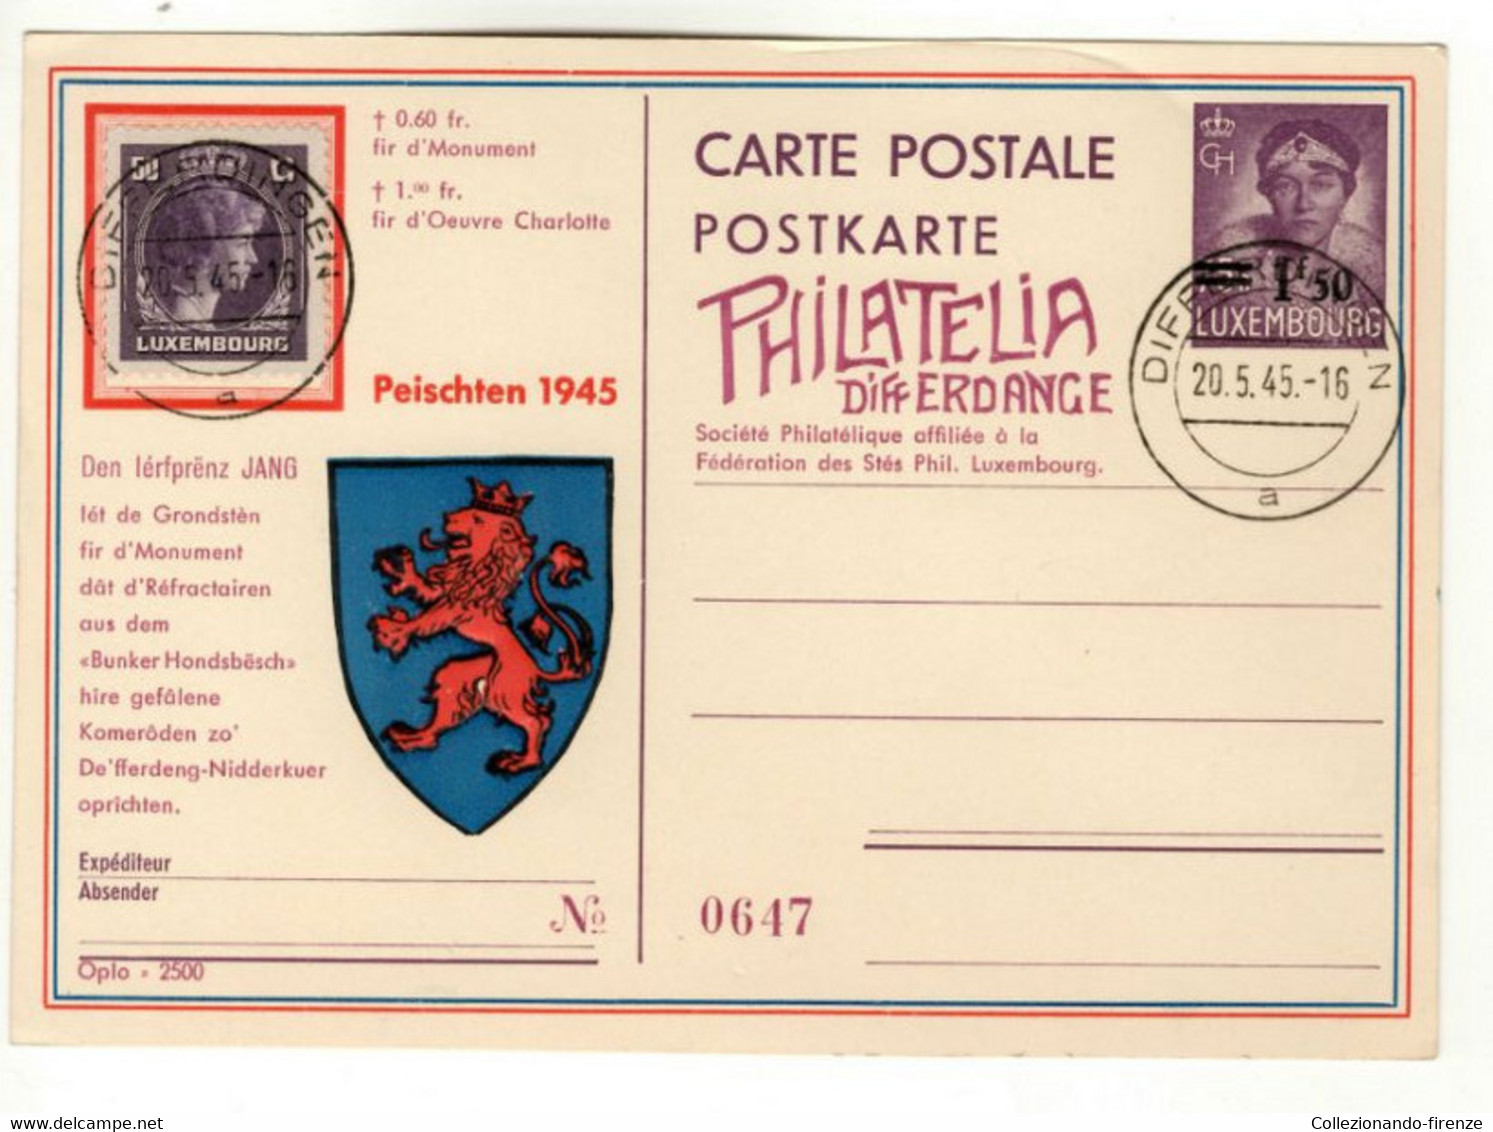 Cartolina Postkarte Philatelia Differdange - Differdingen